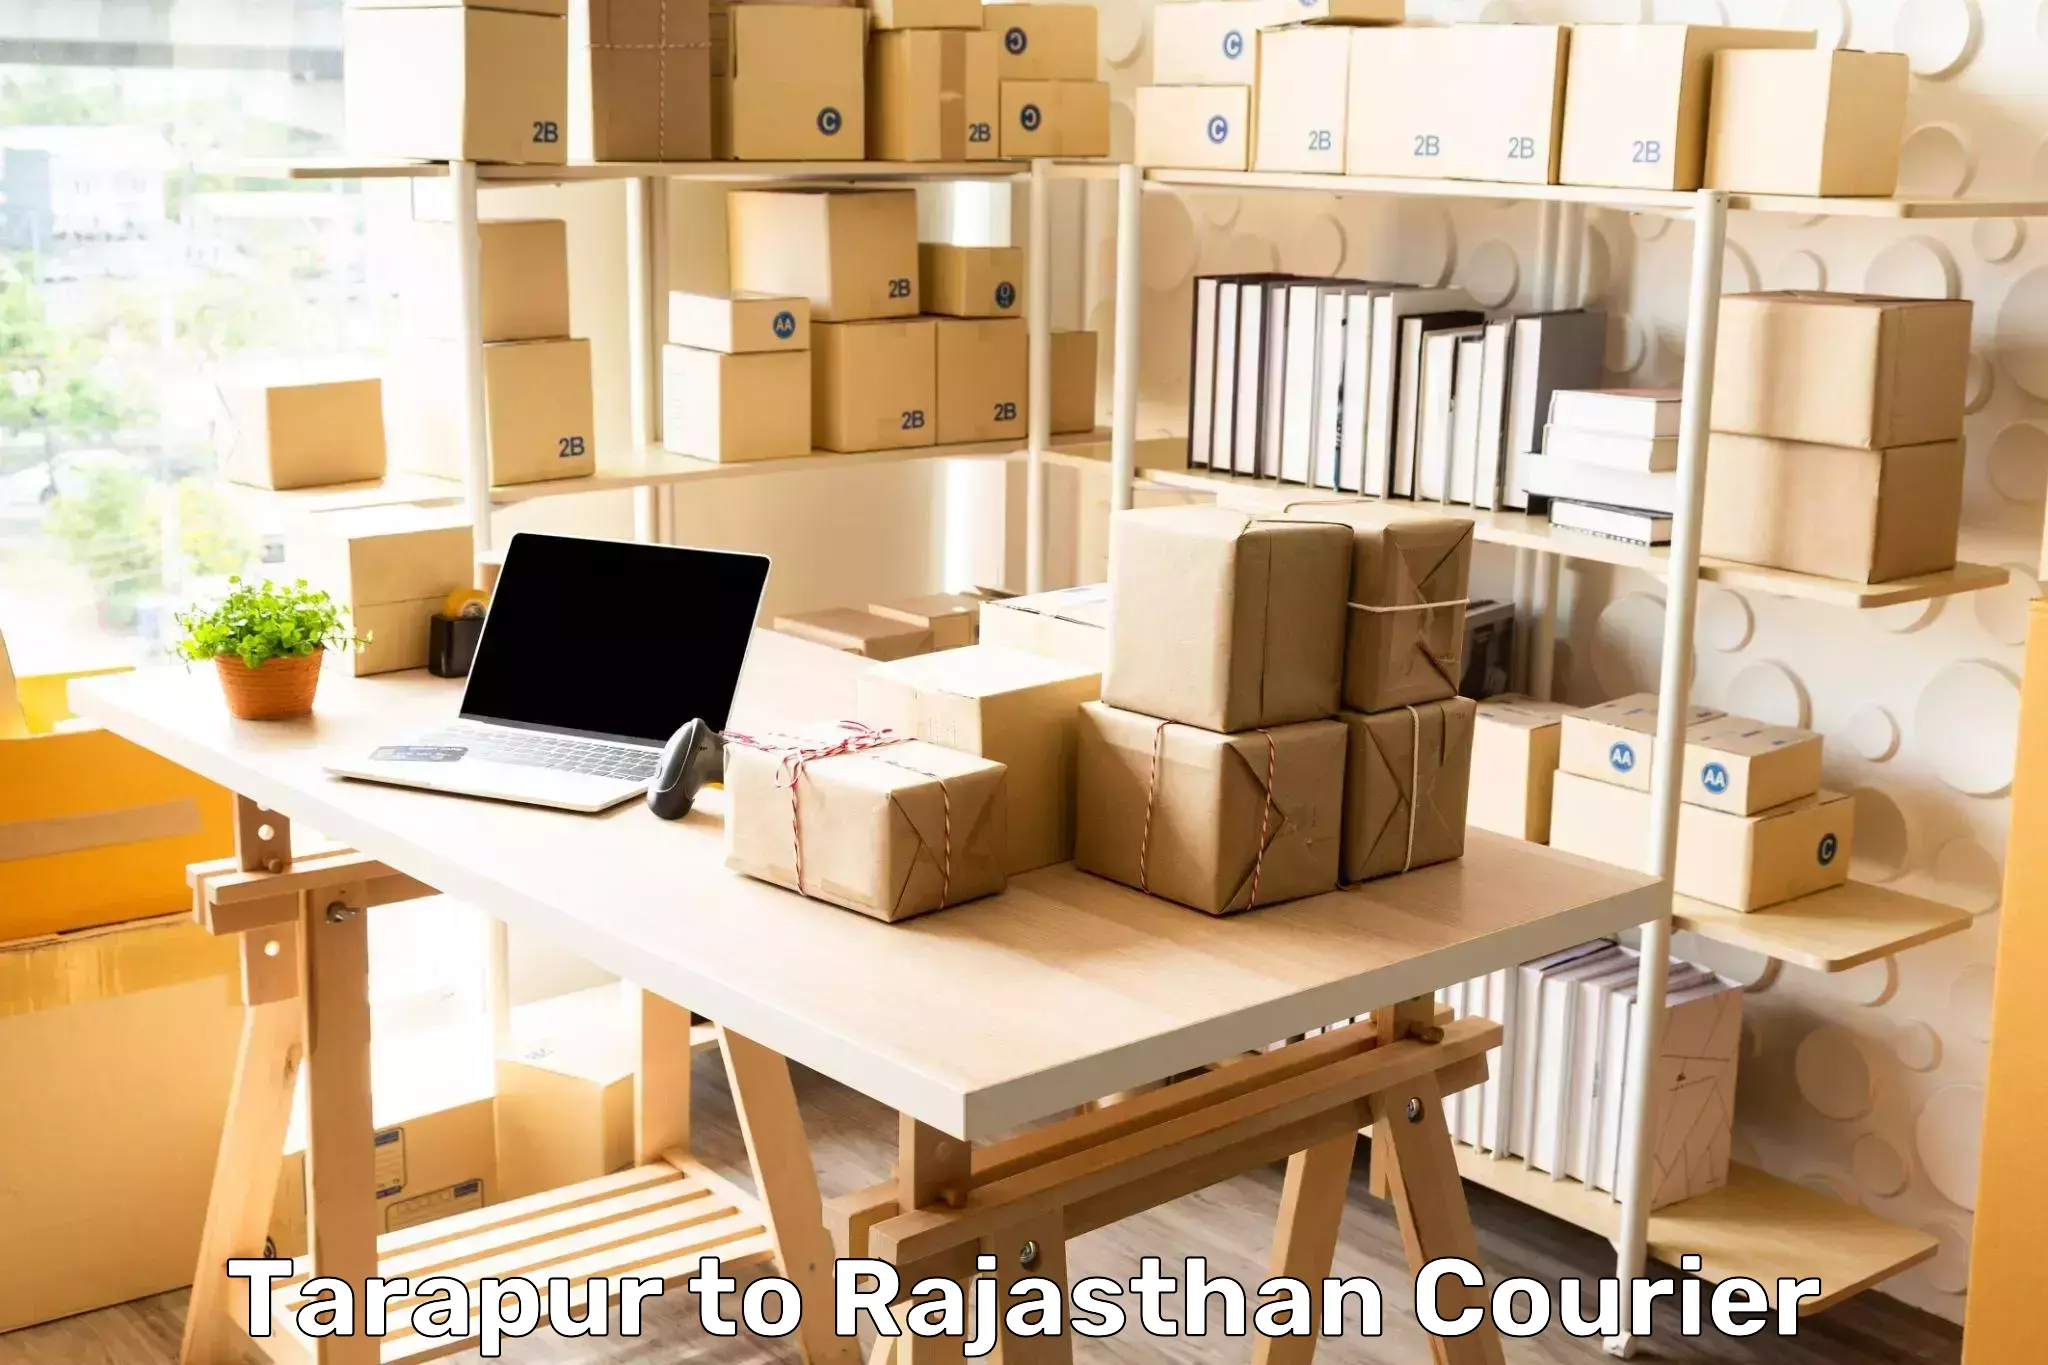 Reliable logistics providers Tarapur to Phulera